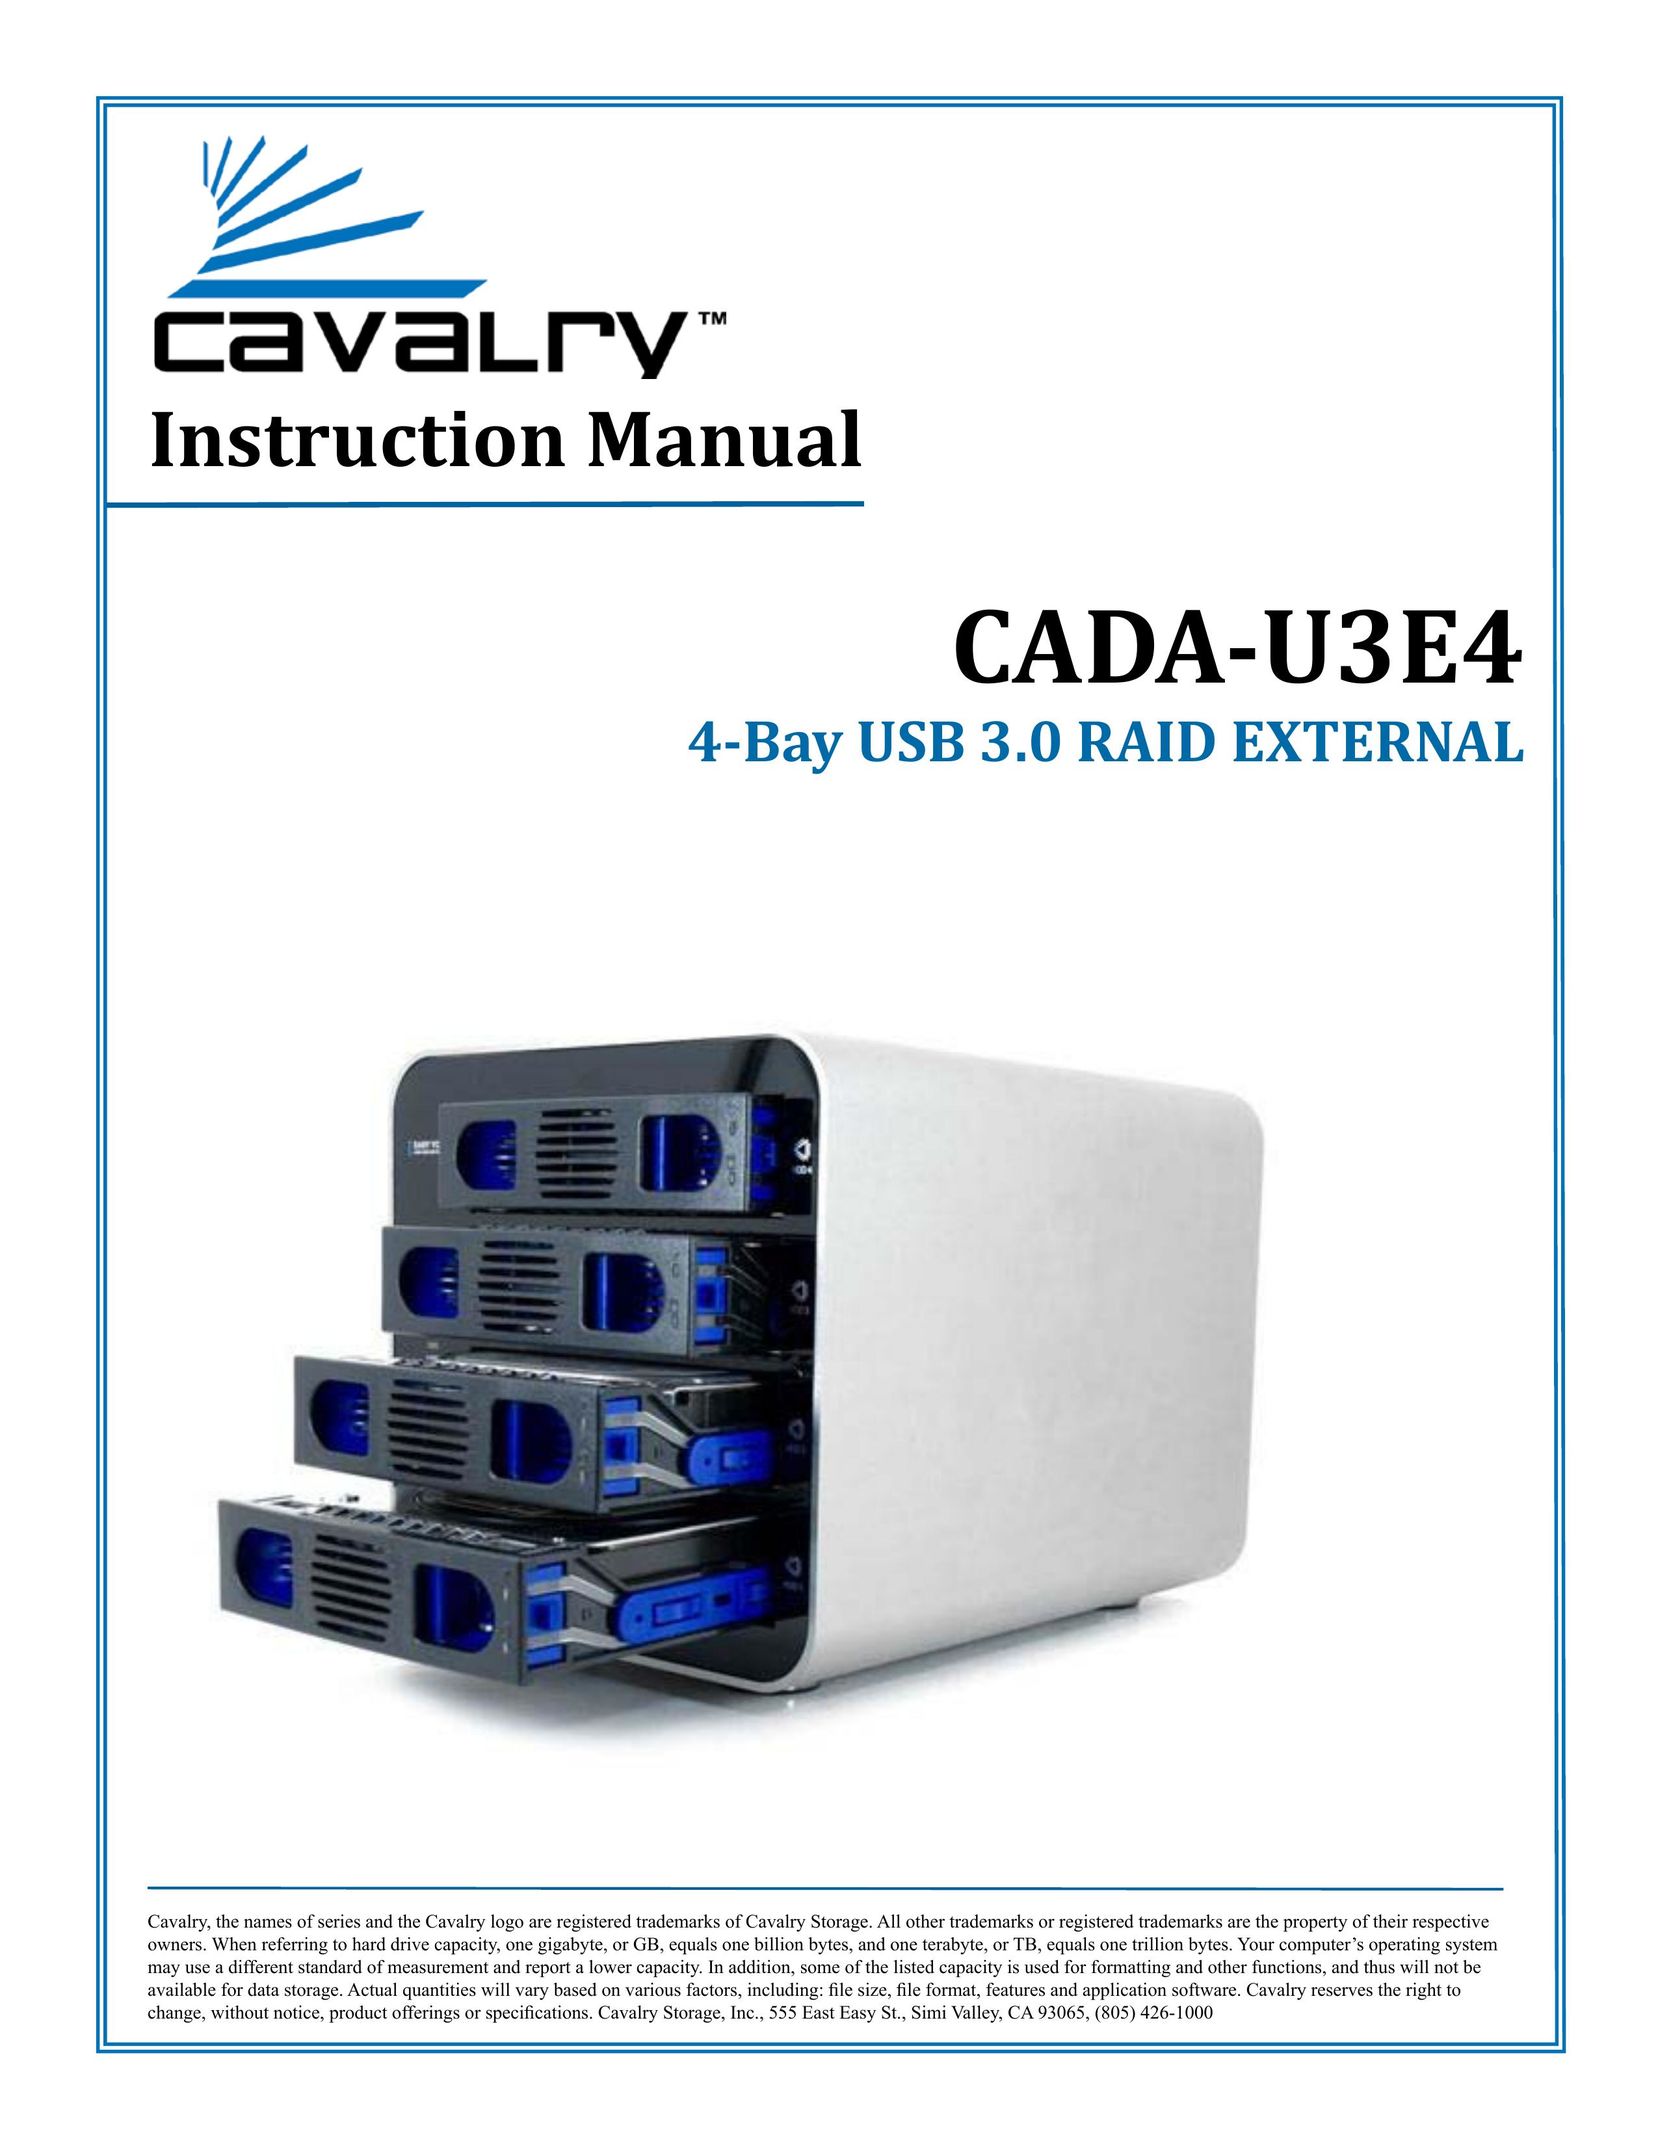 Cavalry Storage CADA-U3E4 Computer Drive User Manual (Page 1)